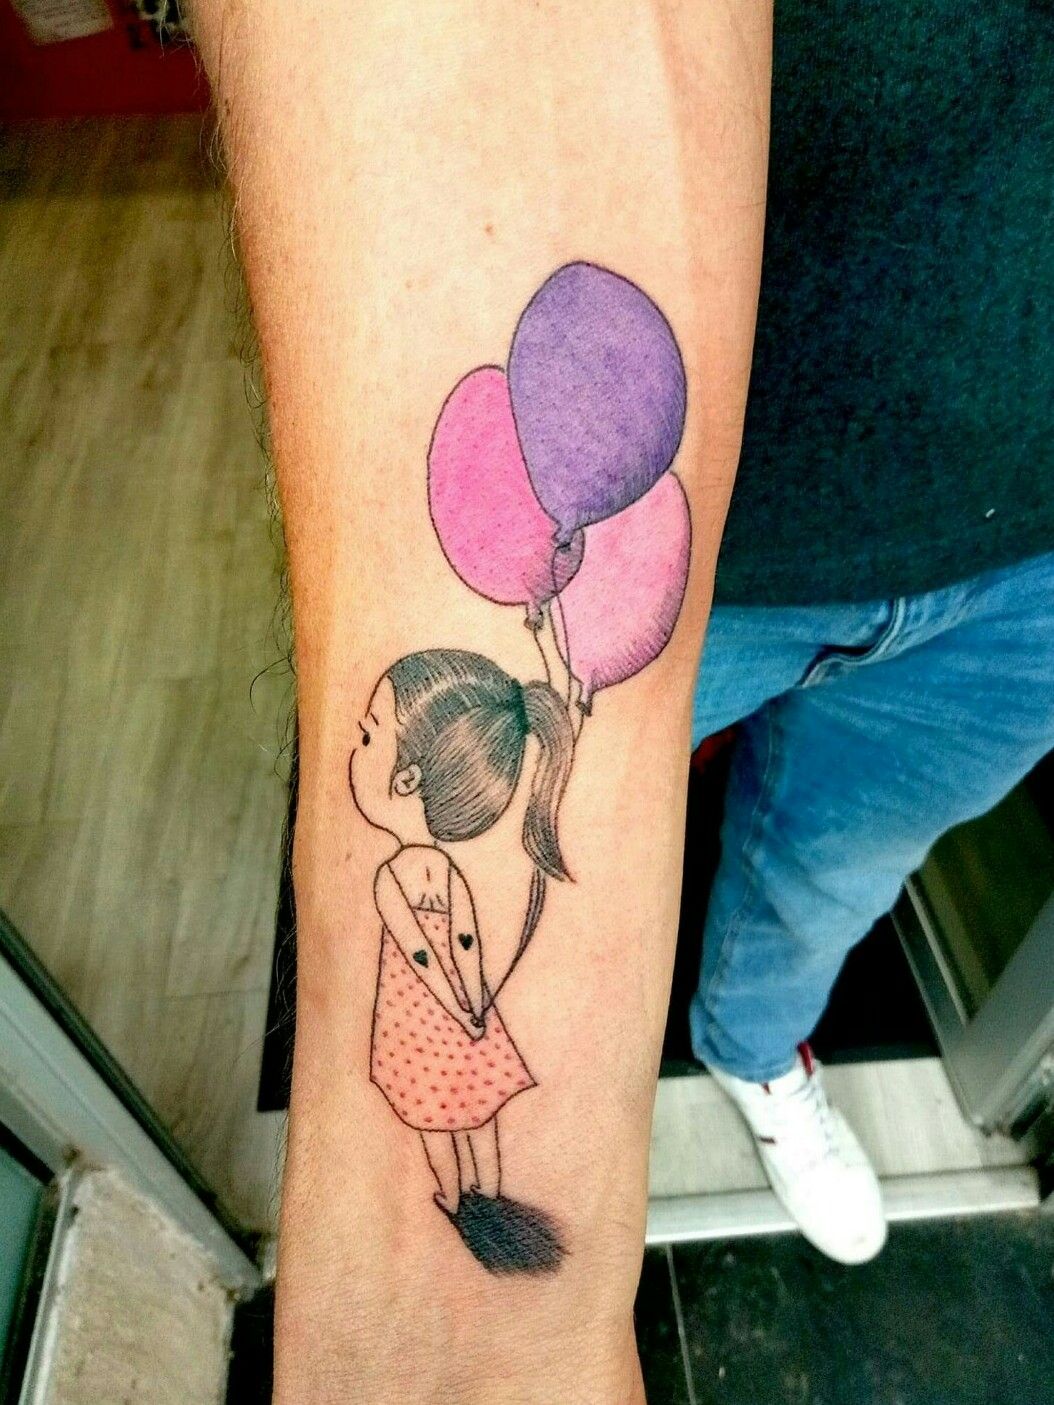 Tattoo uploaded by Laurent • #girl #balloon • Tattoodo